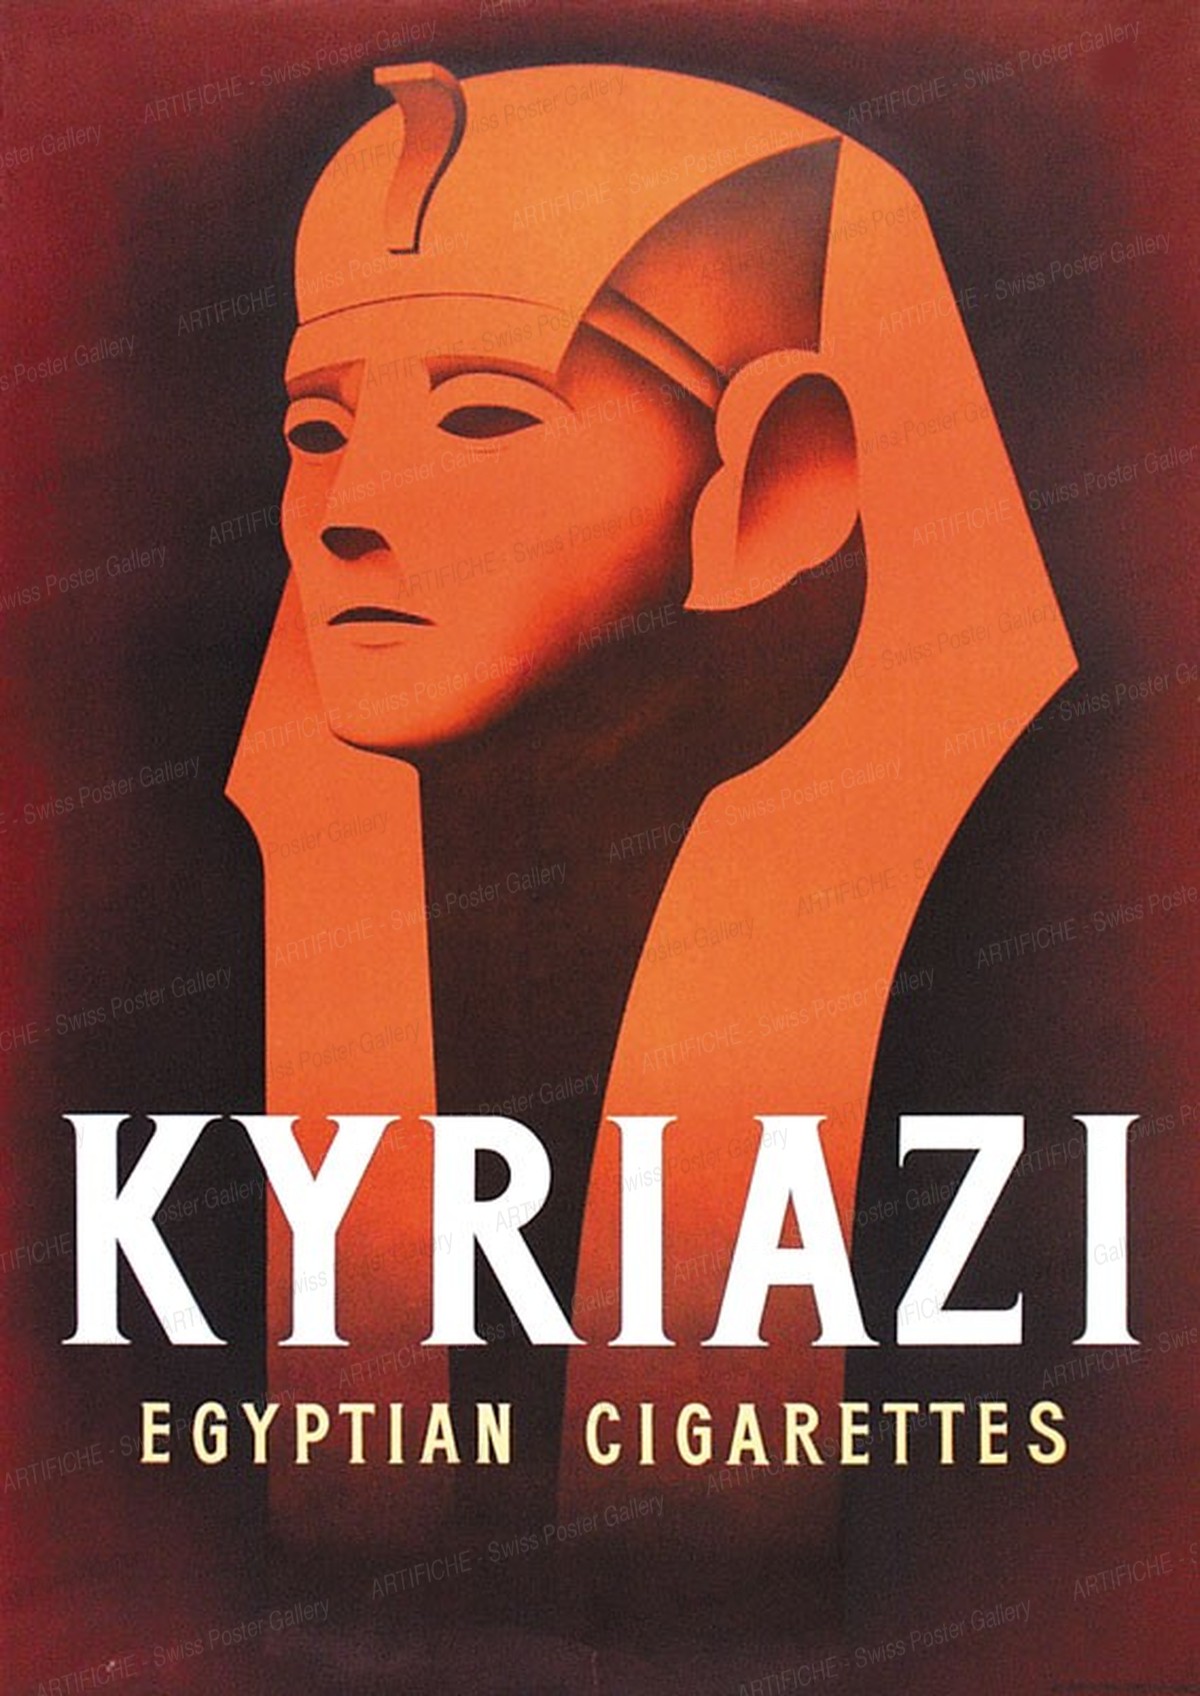 Kyriazi Egyptian Cigarettes, Charles Kuhn